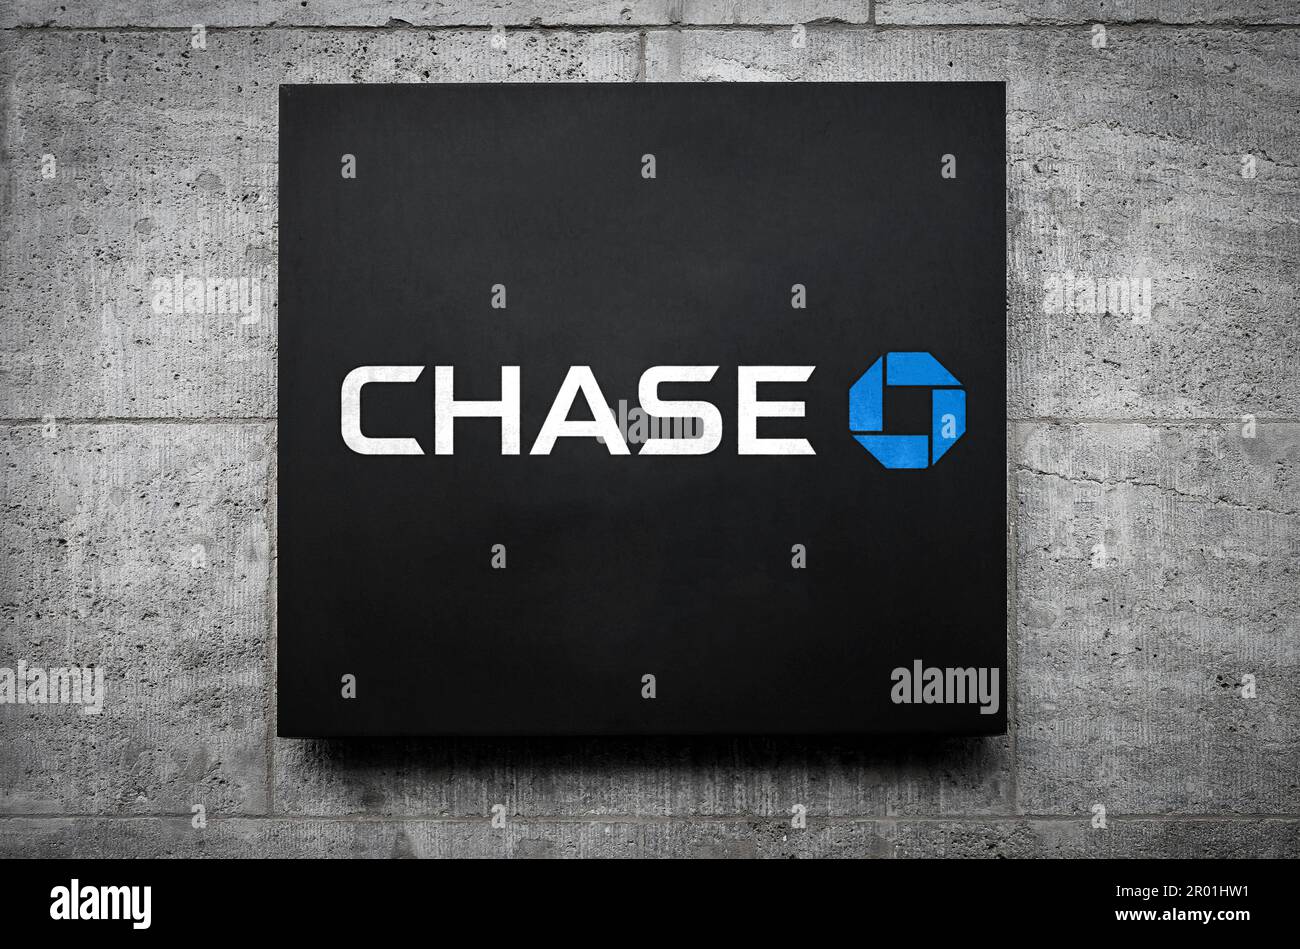 Chase Bank - Banca nazionale americana Foto Stock